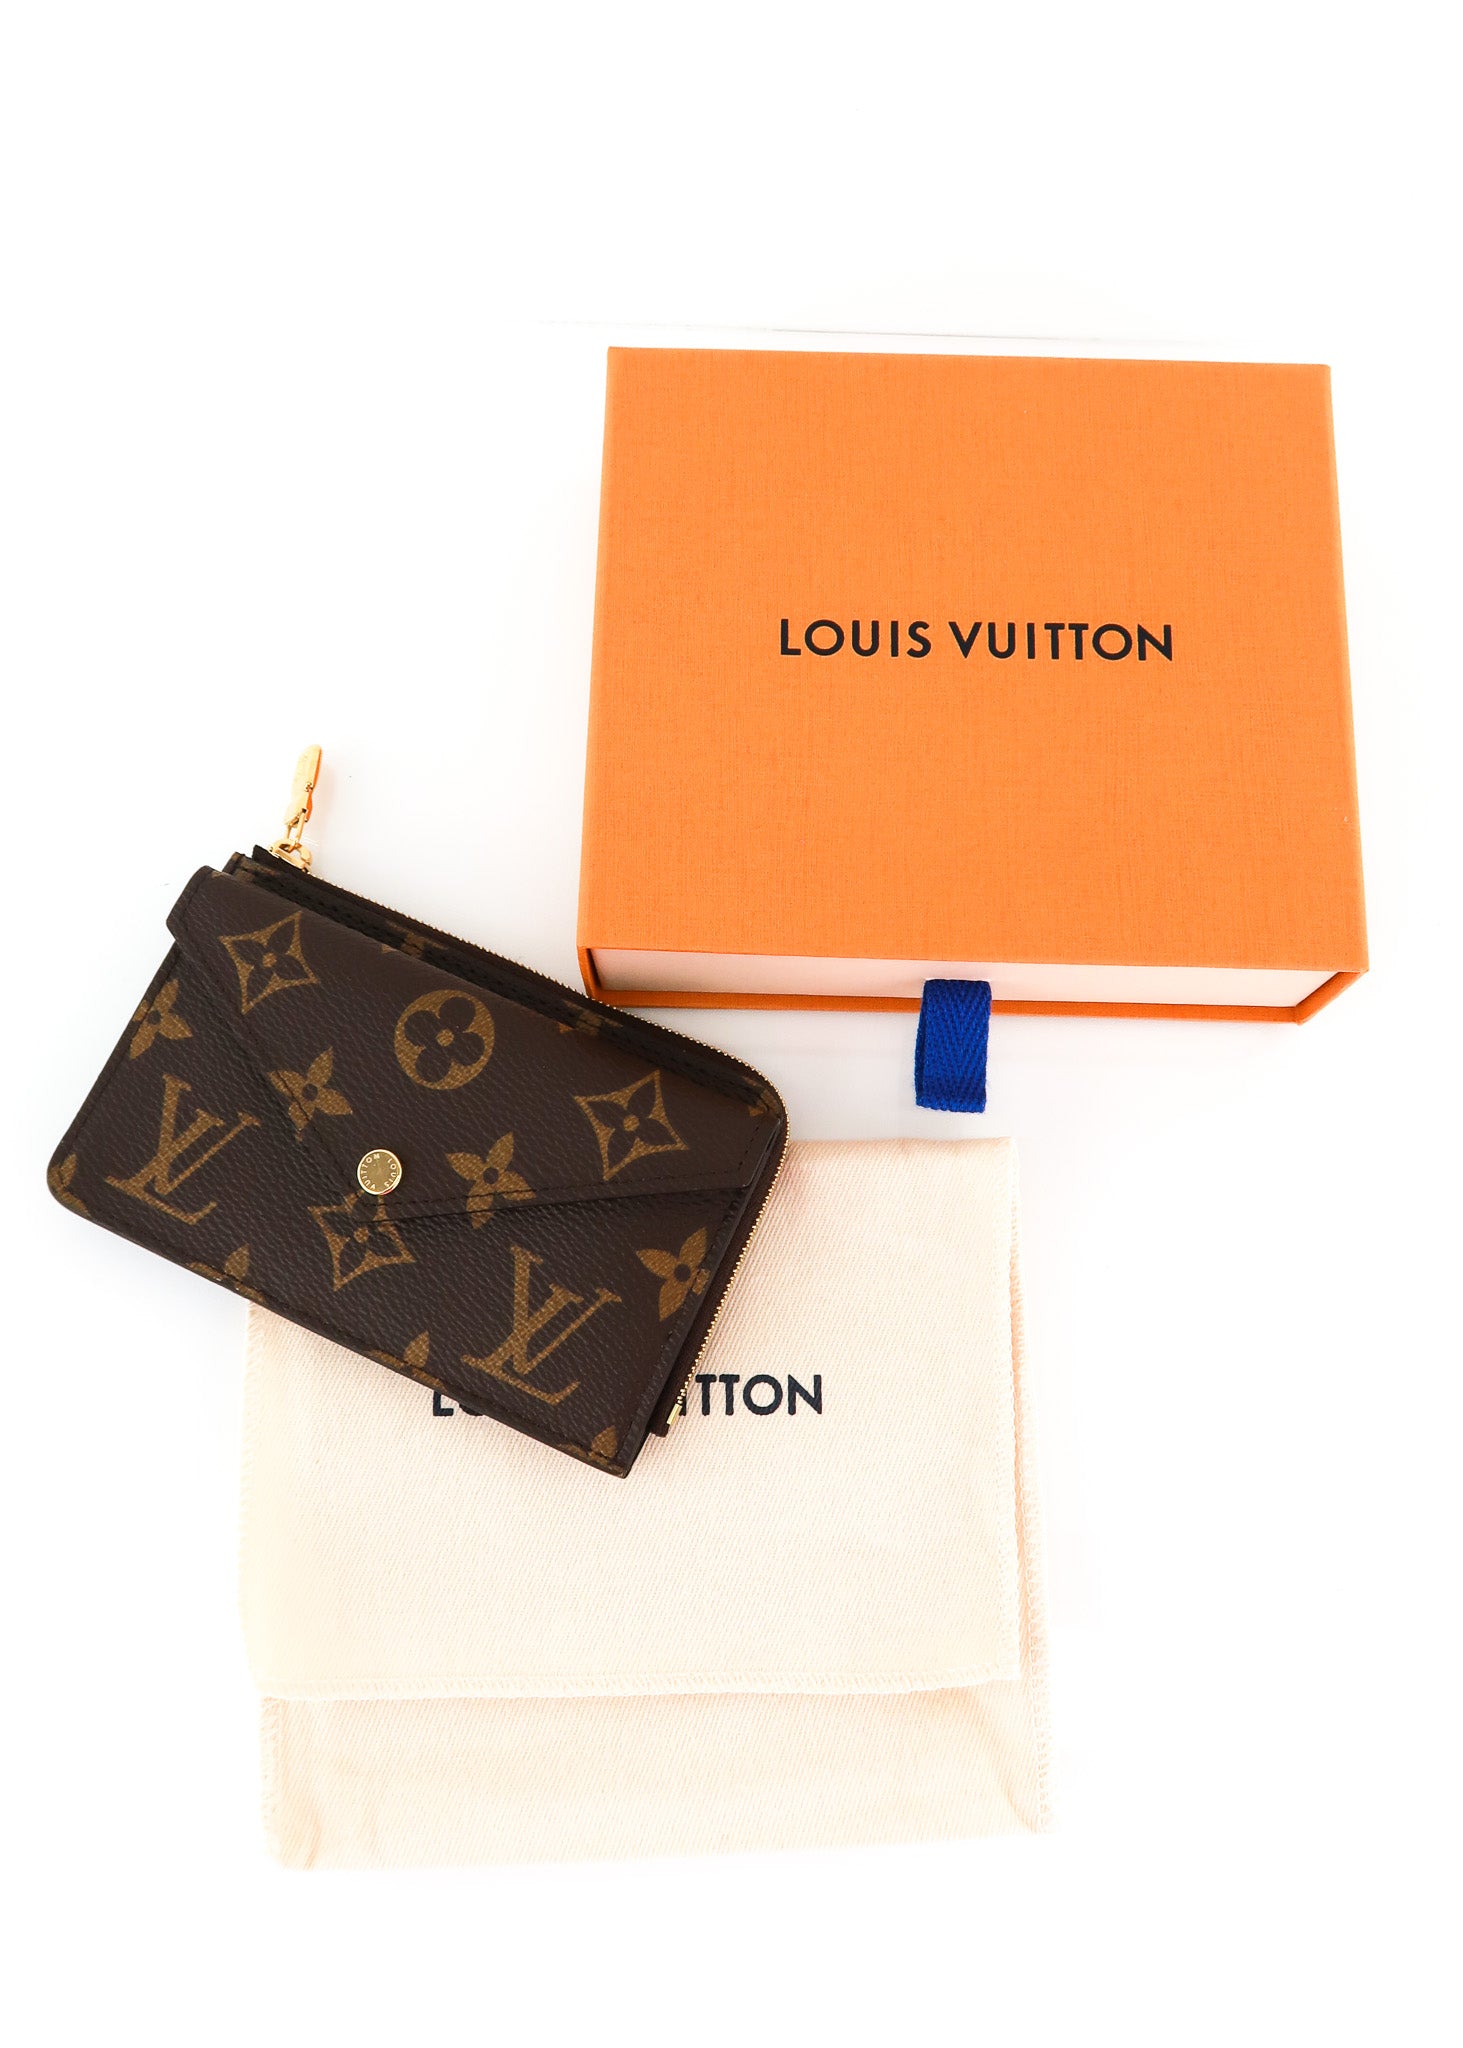 Louis Vuitton Recto Verso VS Key Pouch 